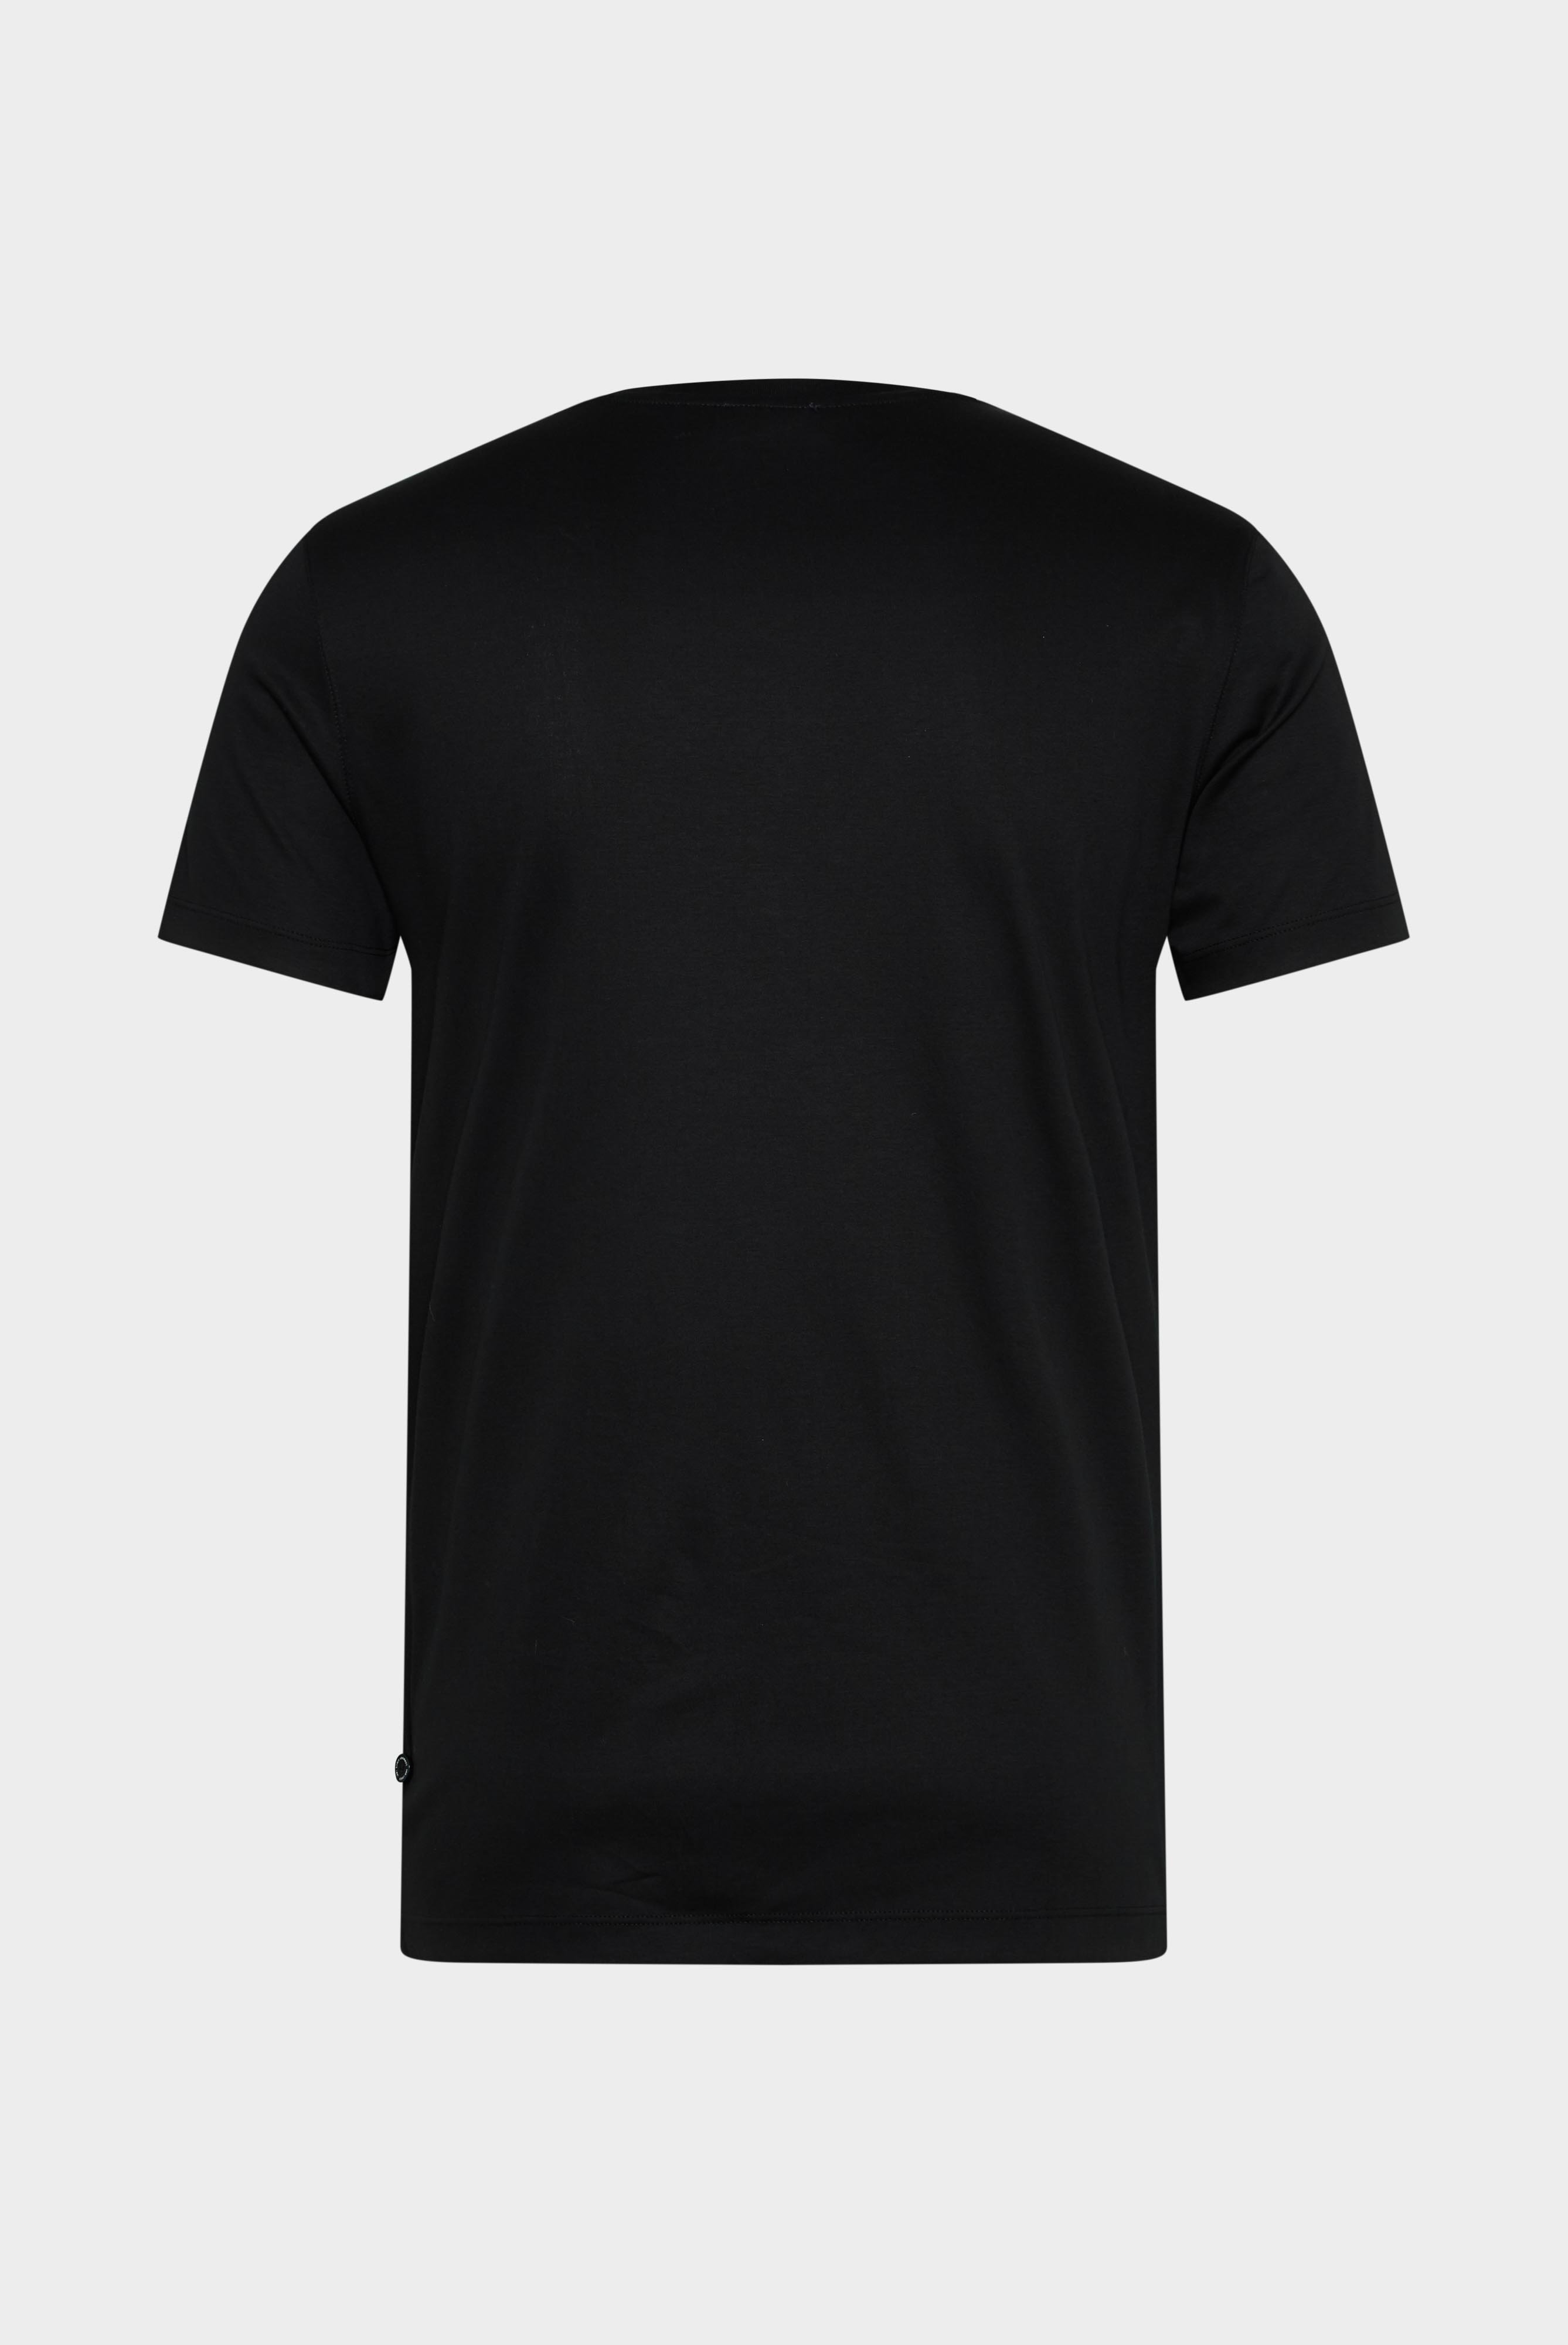 T-Shirts+Swiss Cotton Jersey V-Neck T-Shirt+20.1715.UX.180031.099.XL